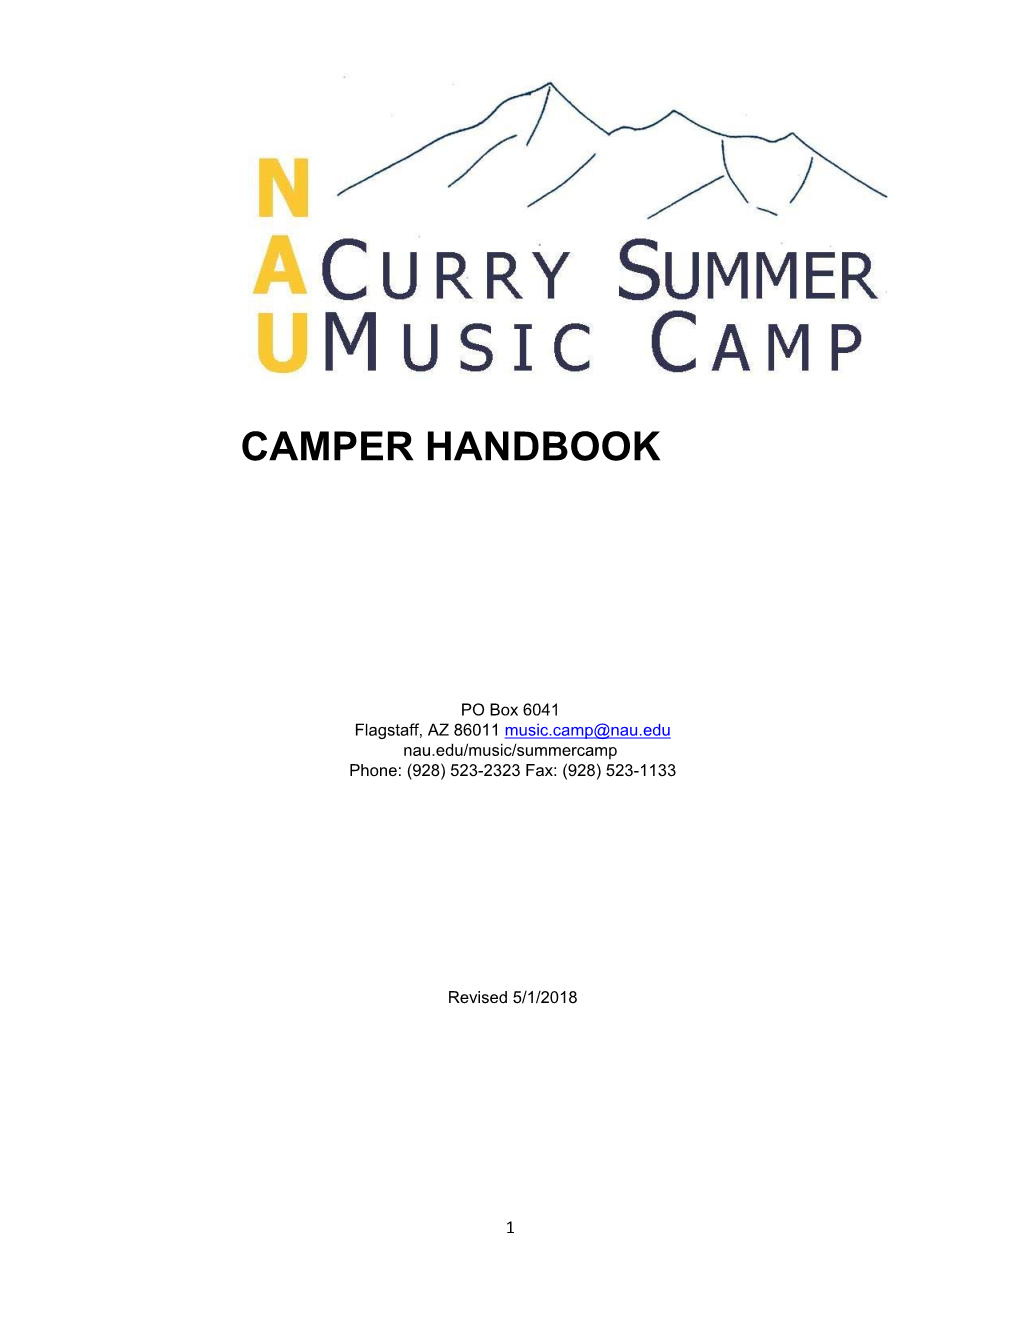 Camper Handbook